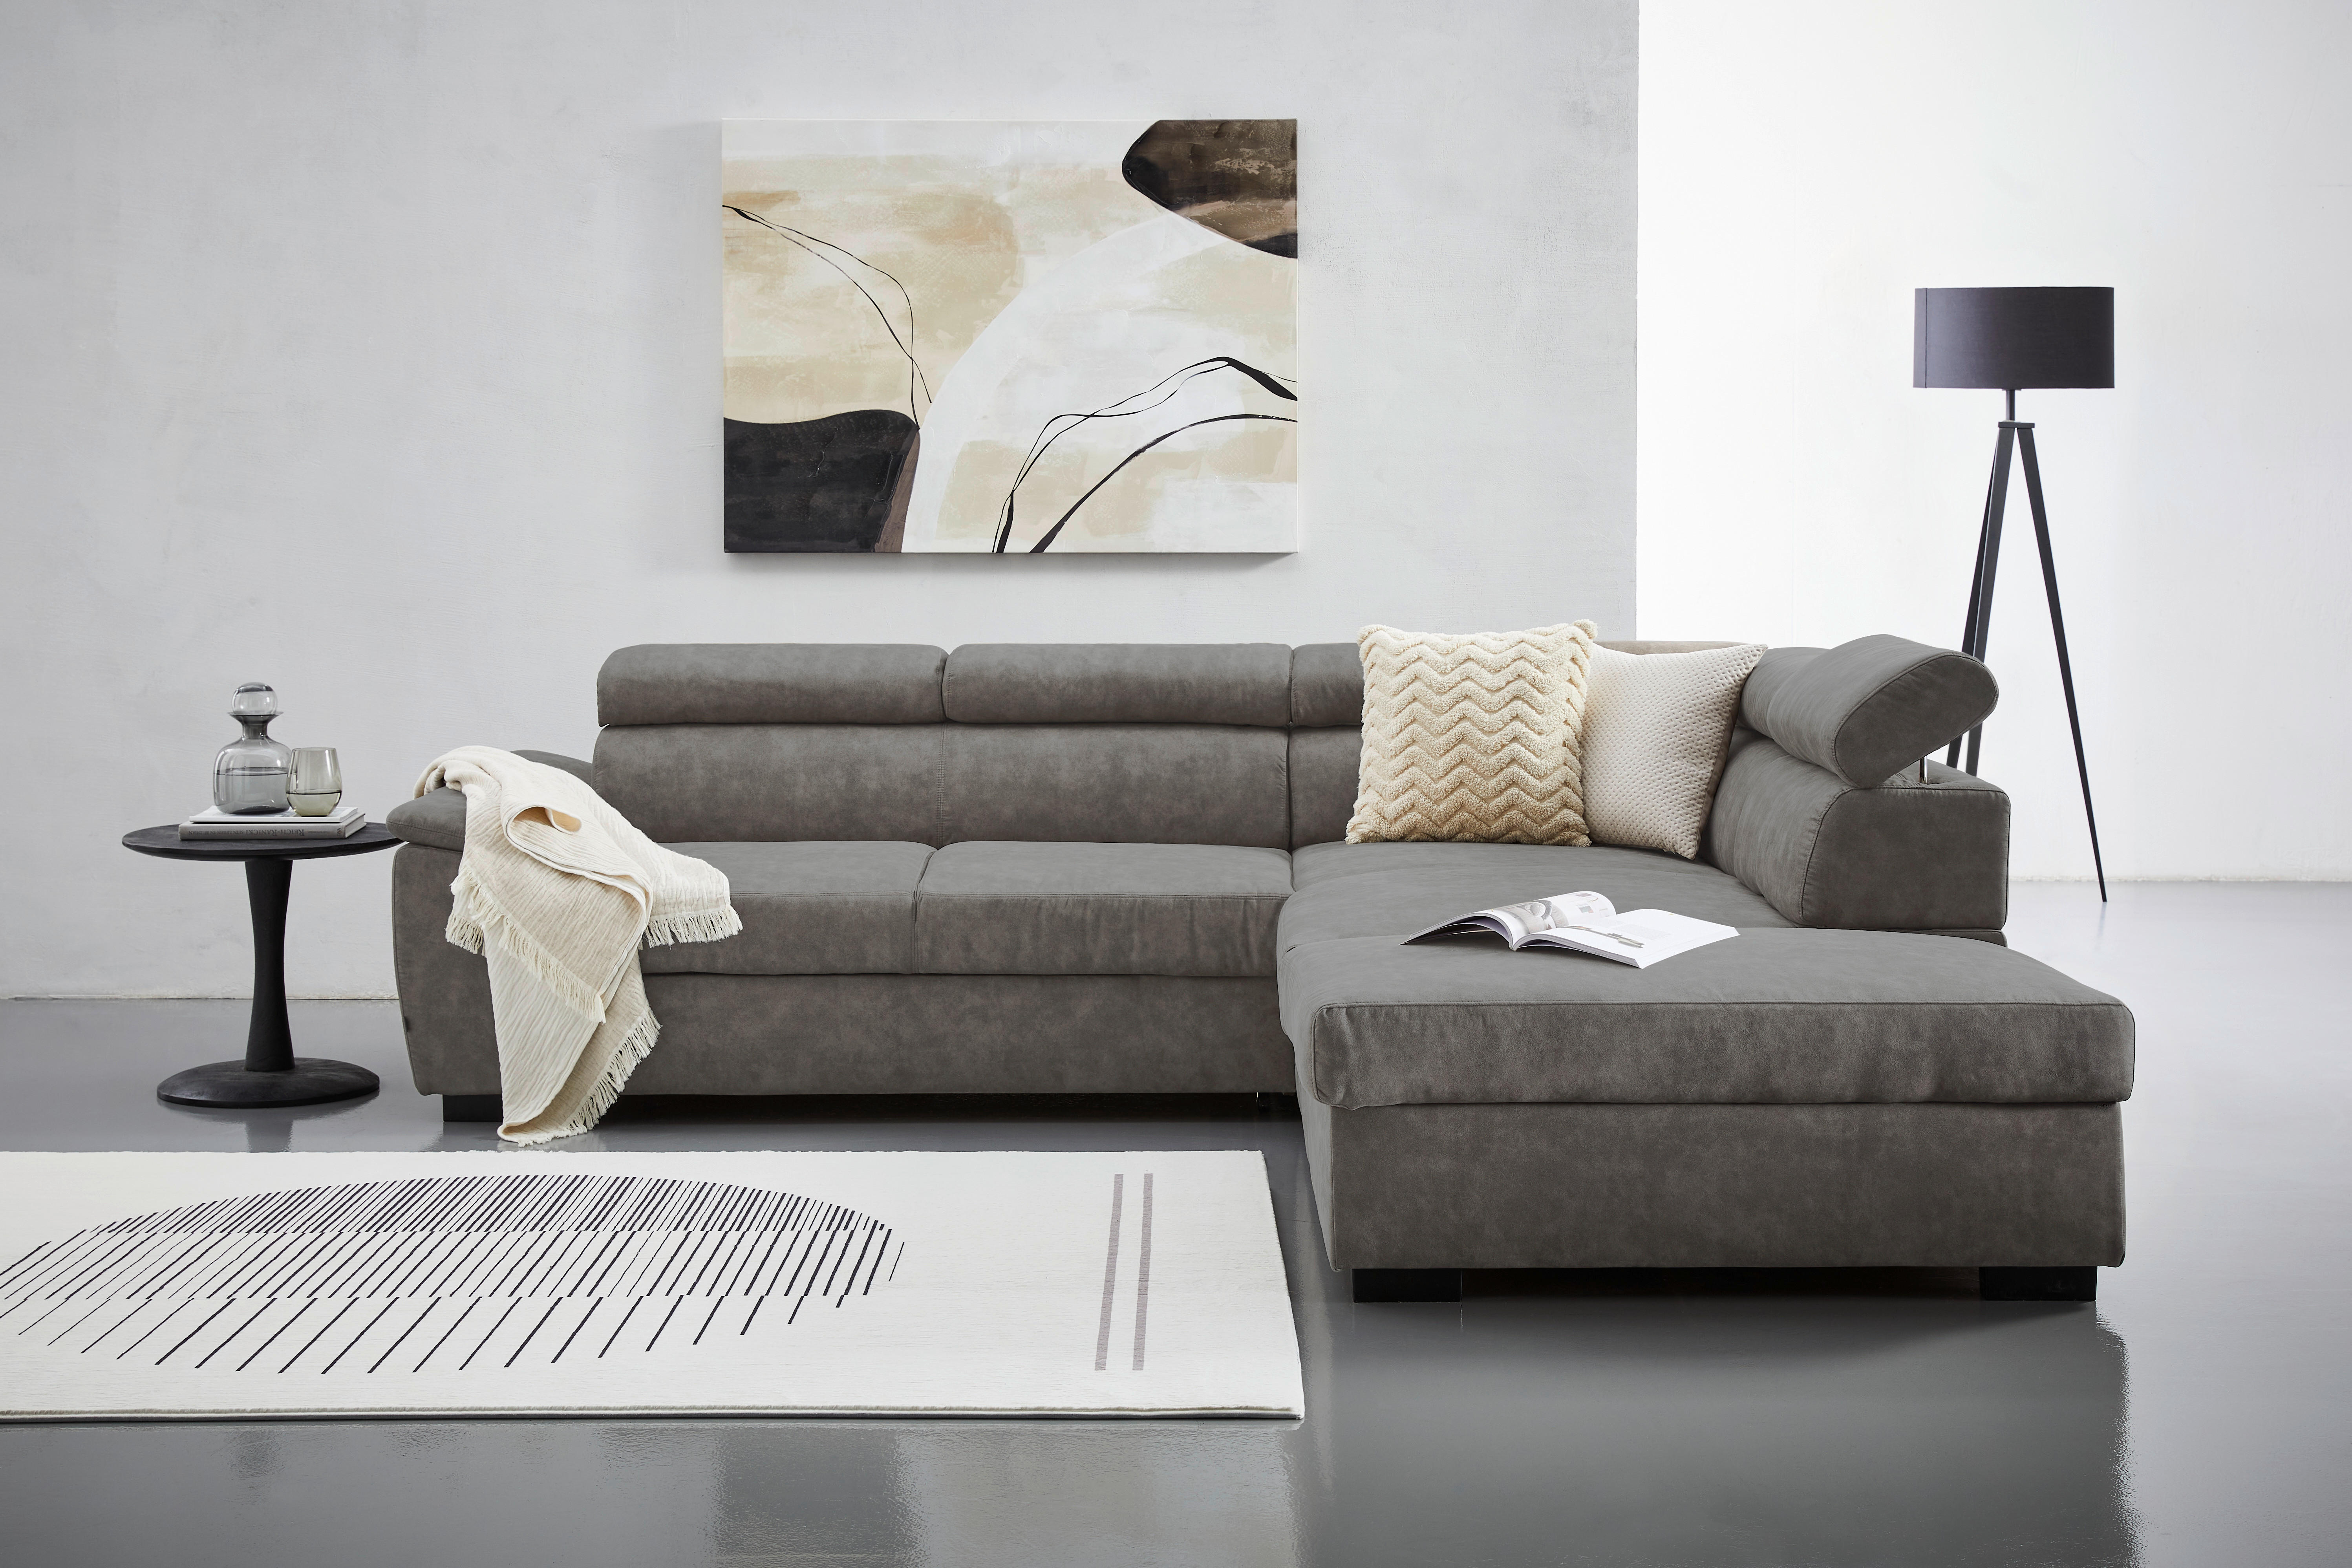 ECKSOFA Grau Lederlook  - Schwarz/Grau, Design, Kunststoff/Textil (263/230cm) - Hom`in